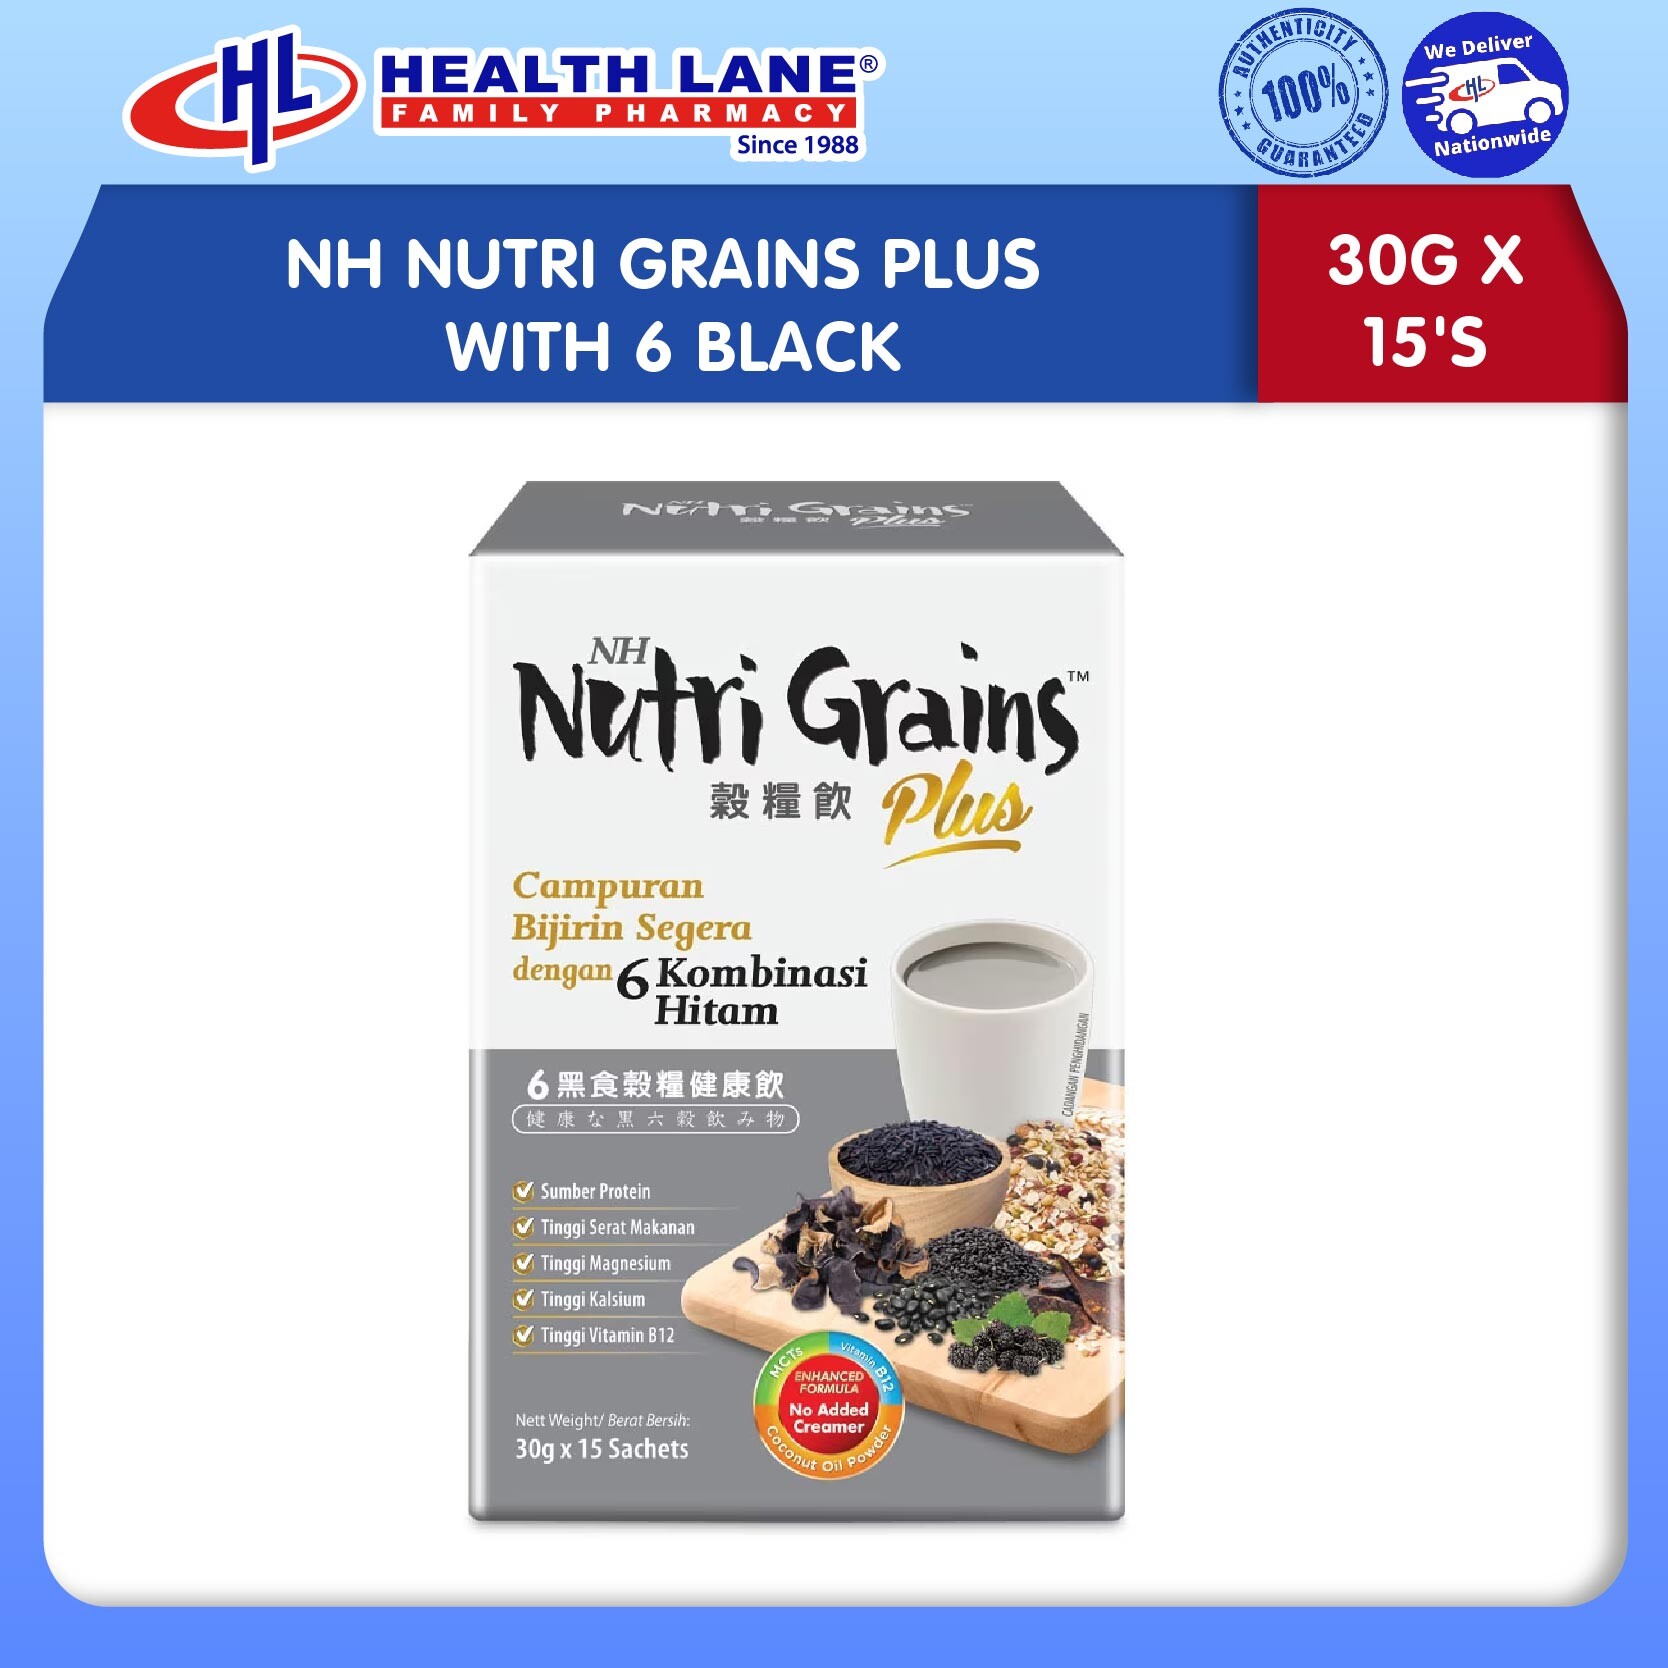 NH NUTRI GRAINS PLUS WITH 6 BLACK (30G X 15'S)